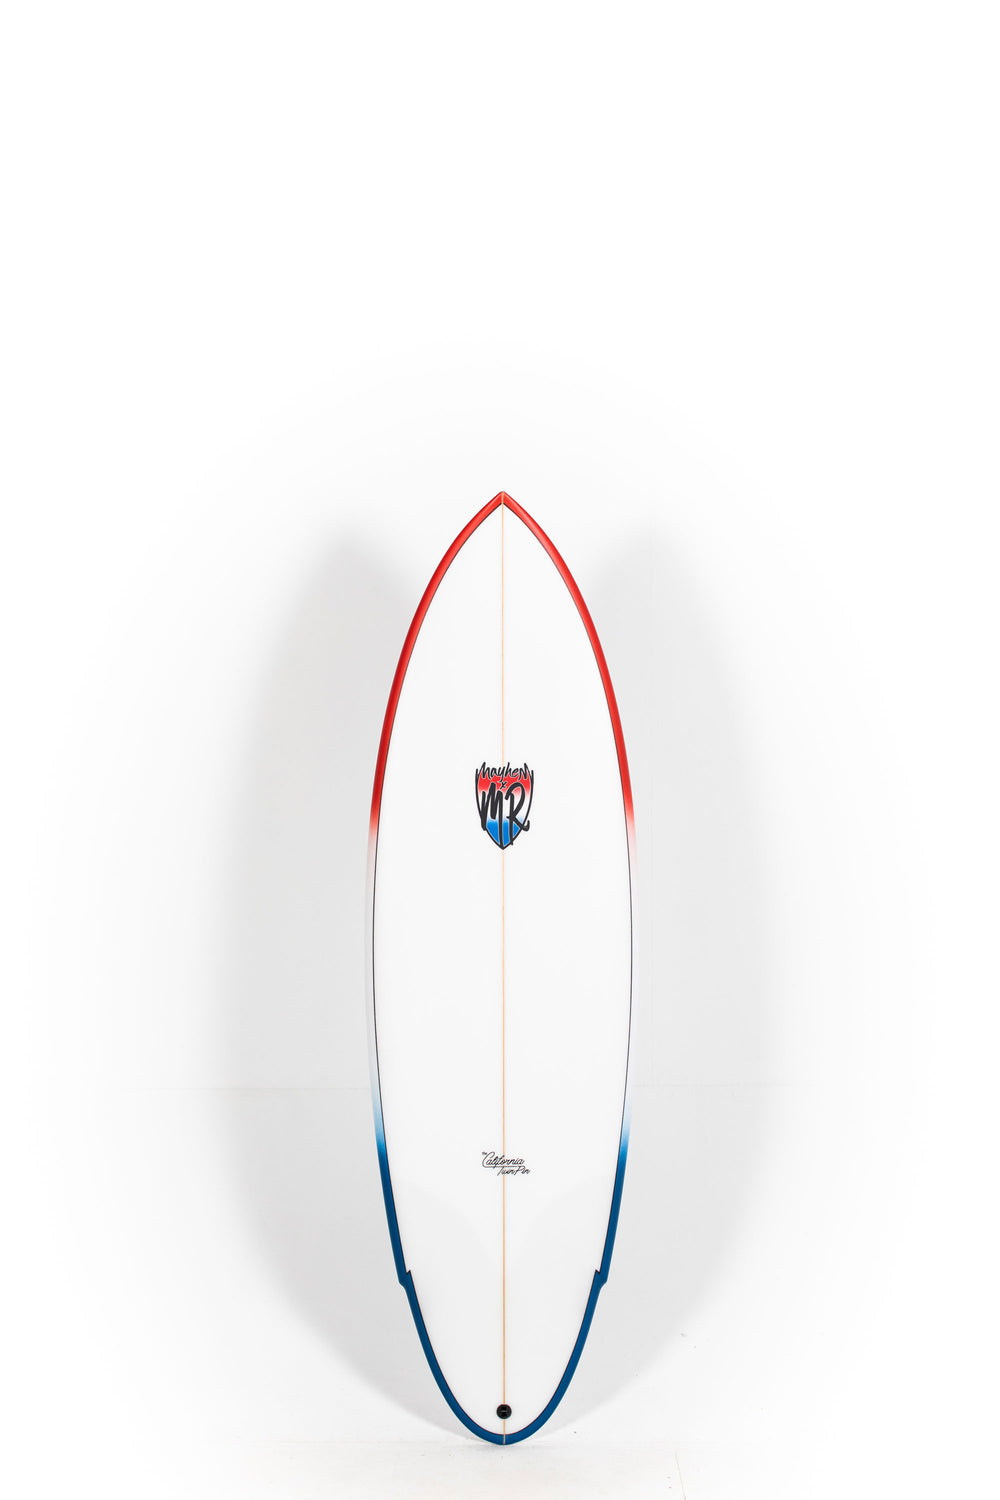 Pukas Surf Shop - Lost Surfboards - CALIFORNIA TWIN PIN by Matt Biolos - 5'9